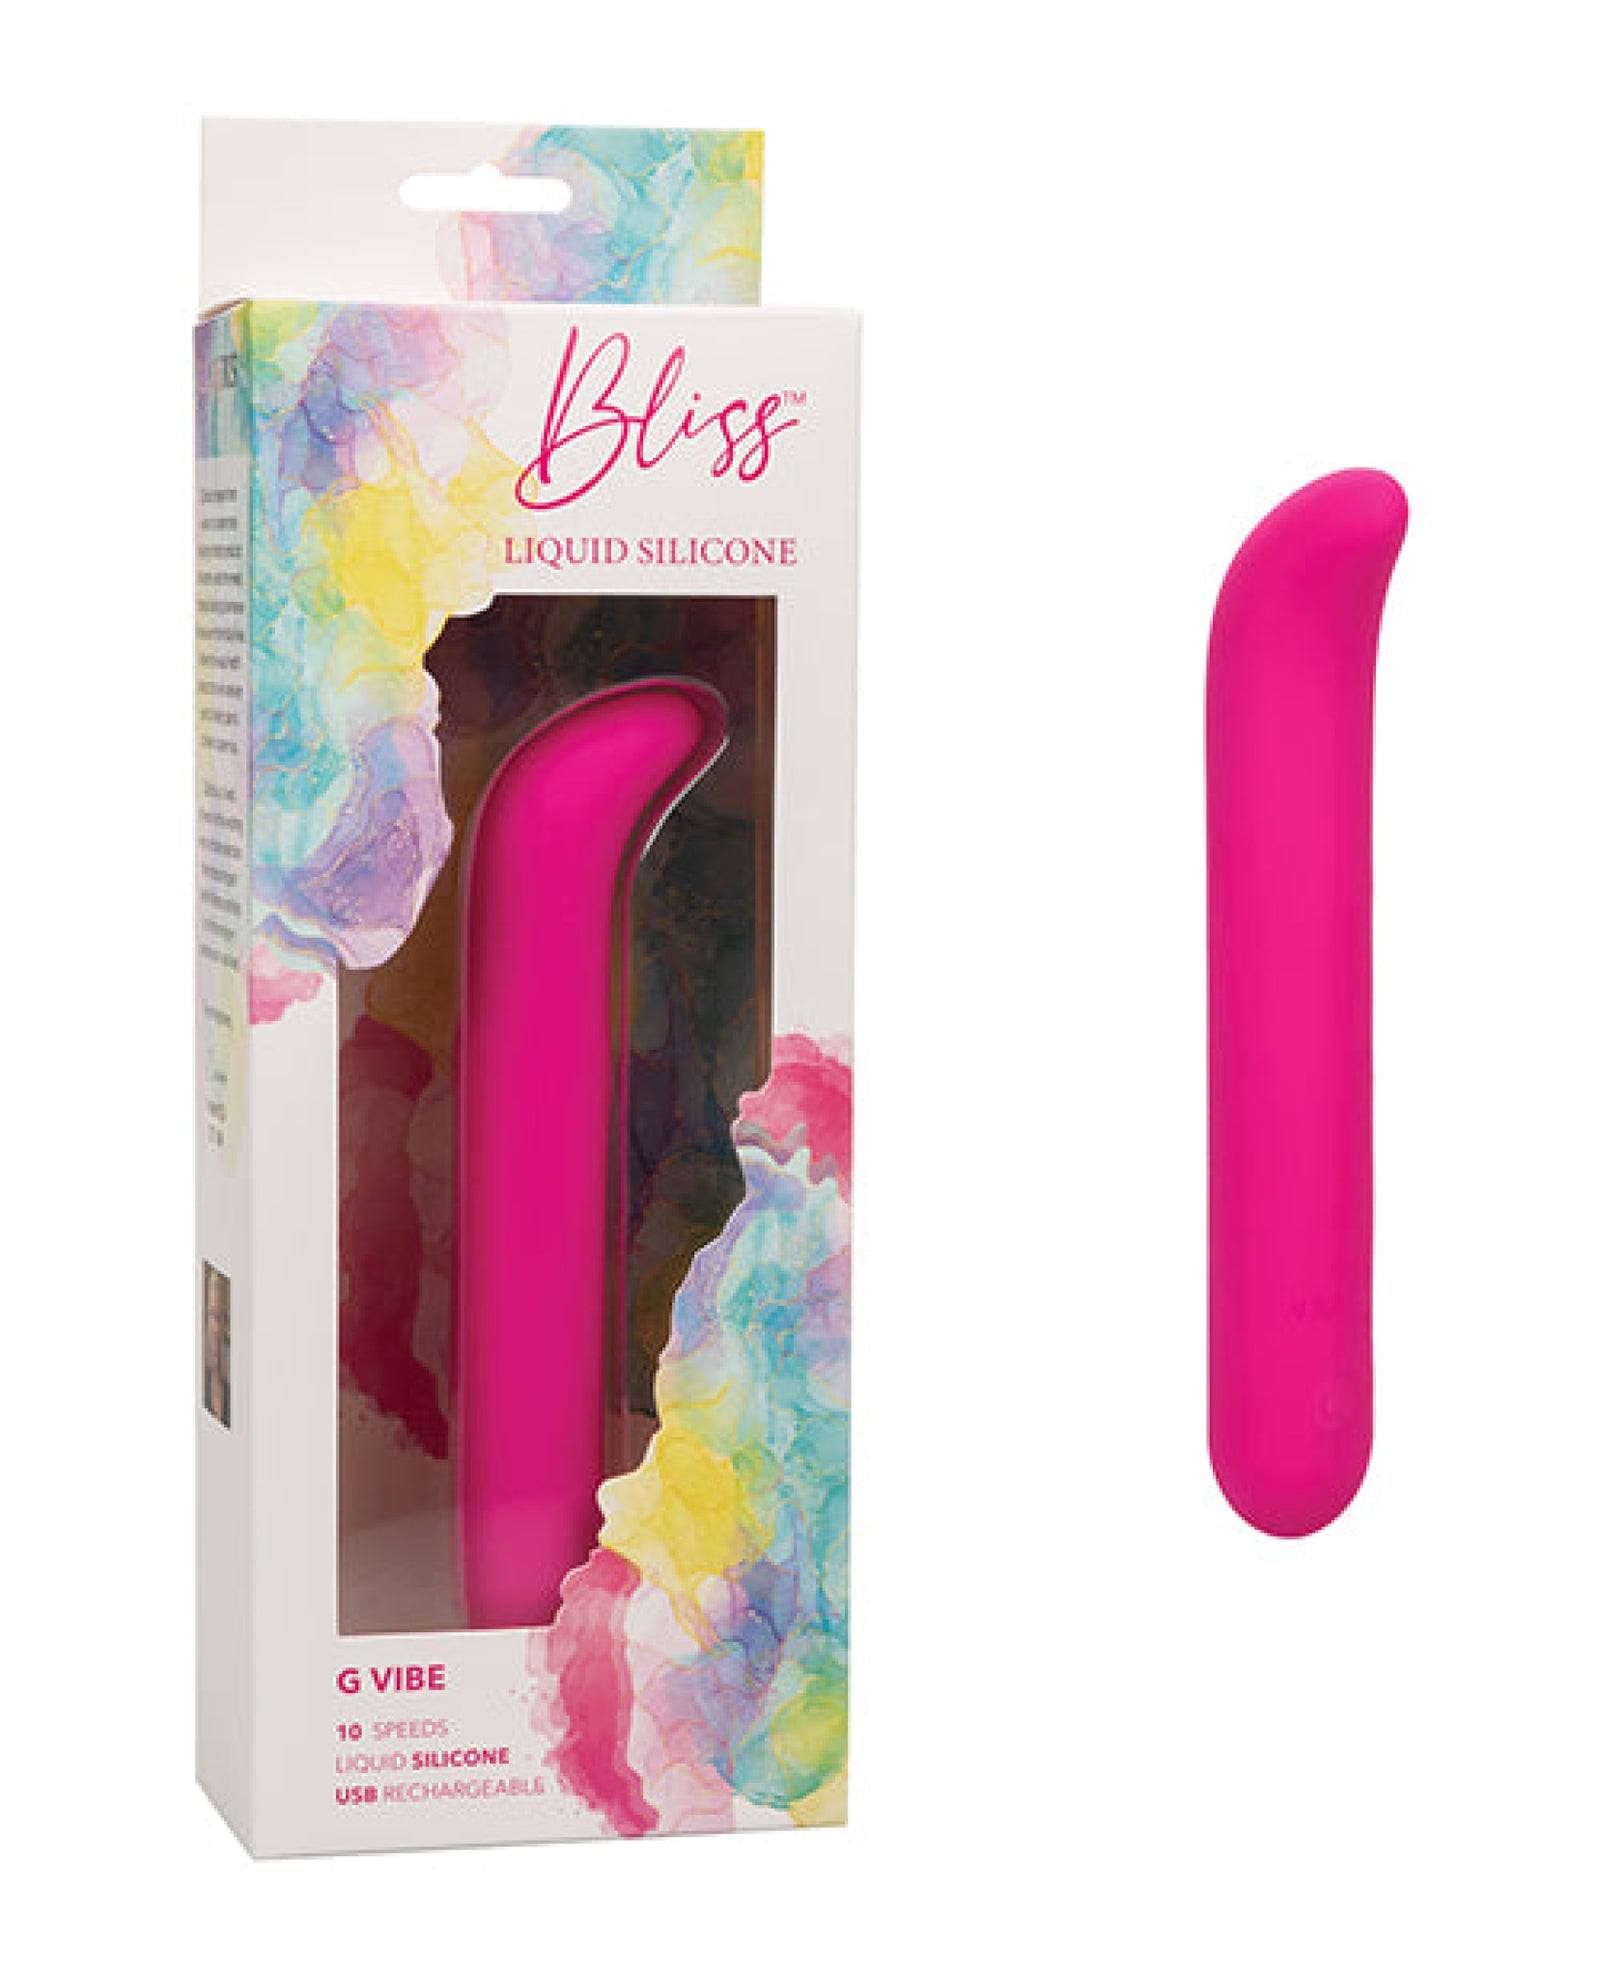 Bliss Liquid Silicone G Vibe - Pink California Exotic Novelties